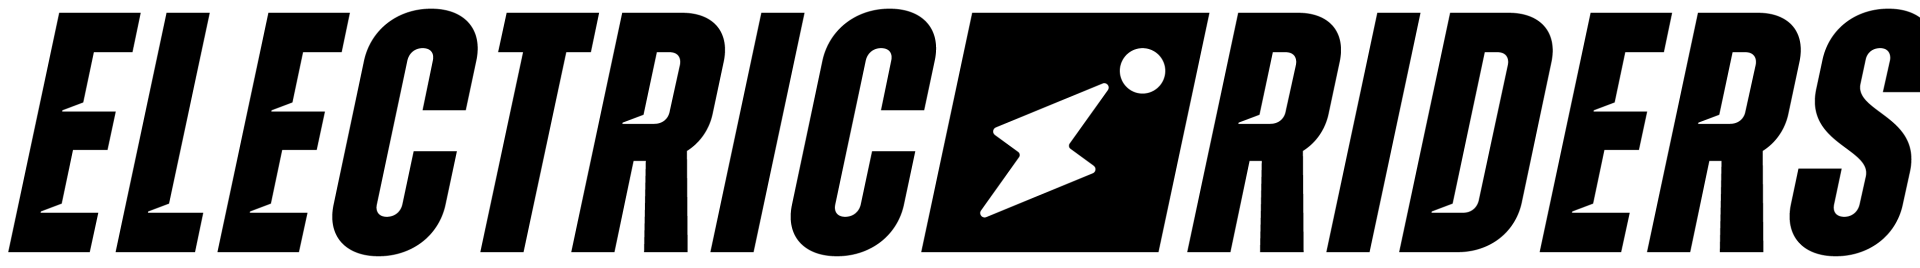 Electric-Riders-logo